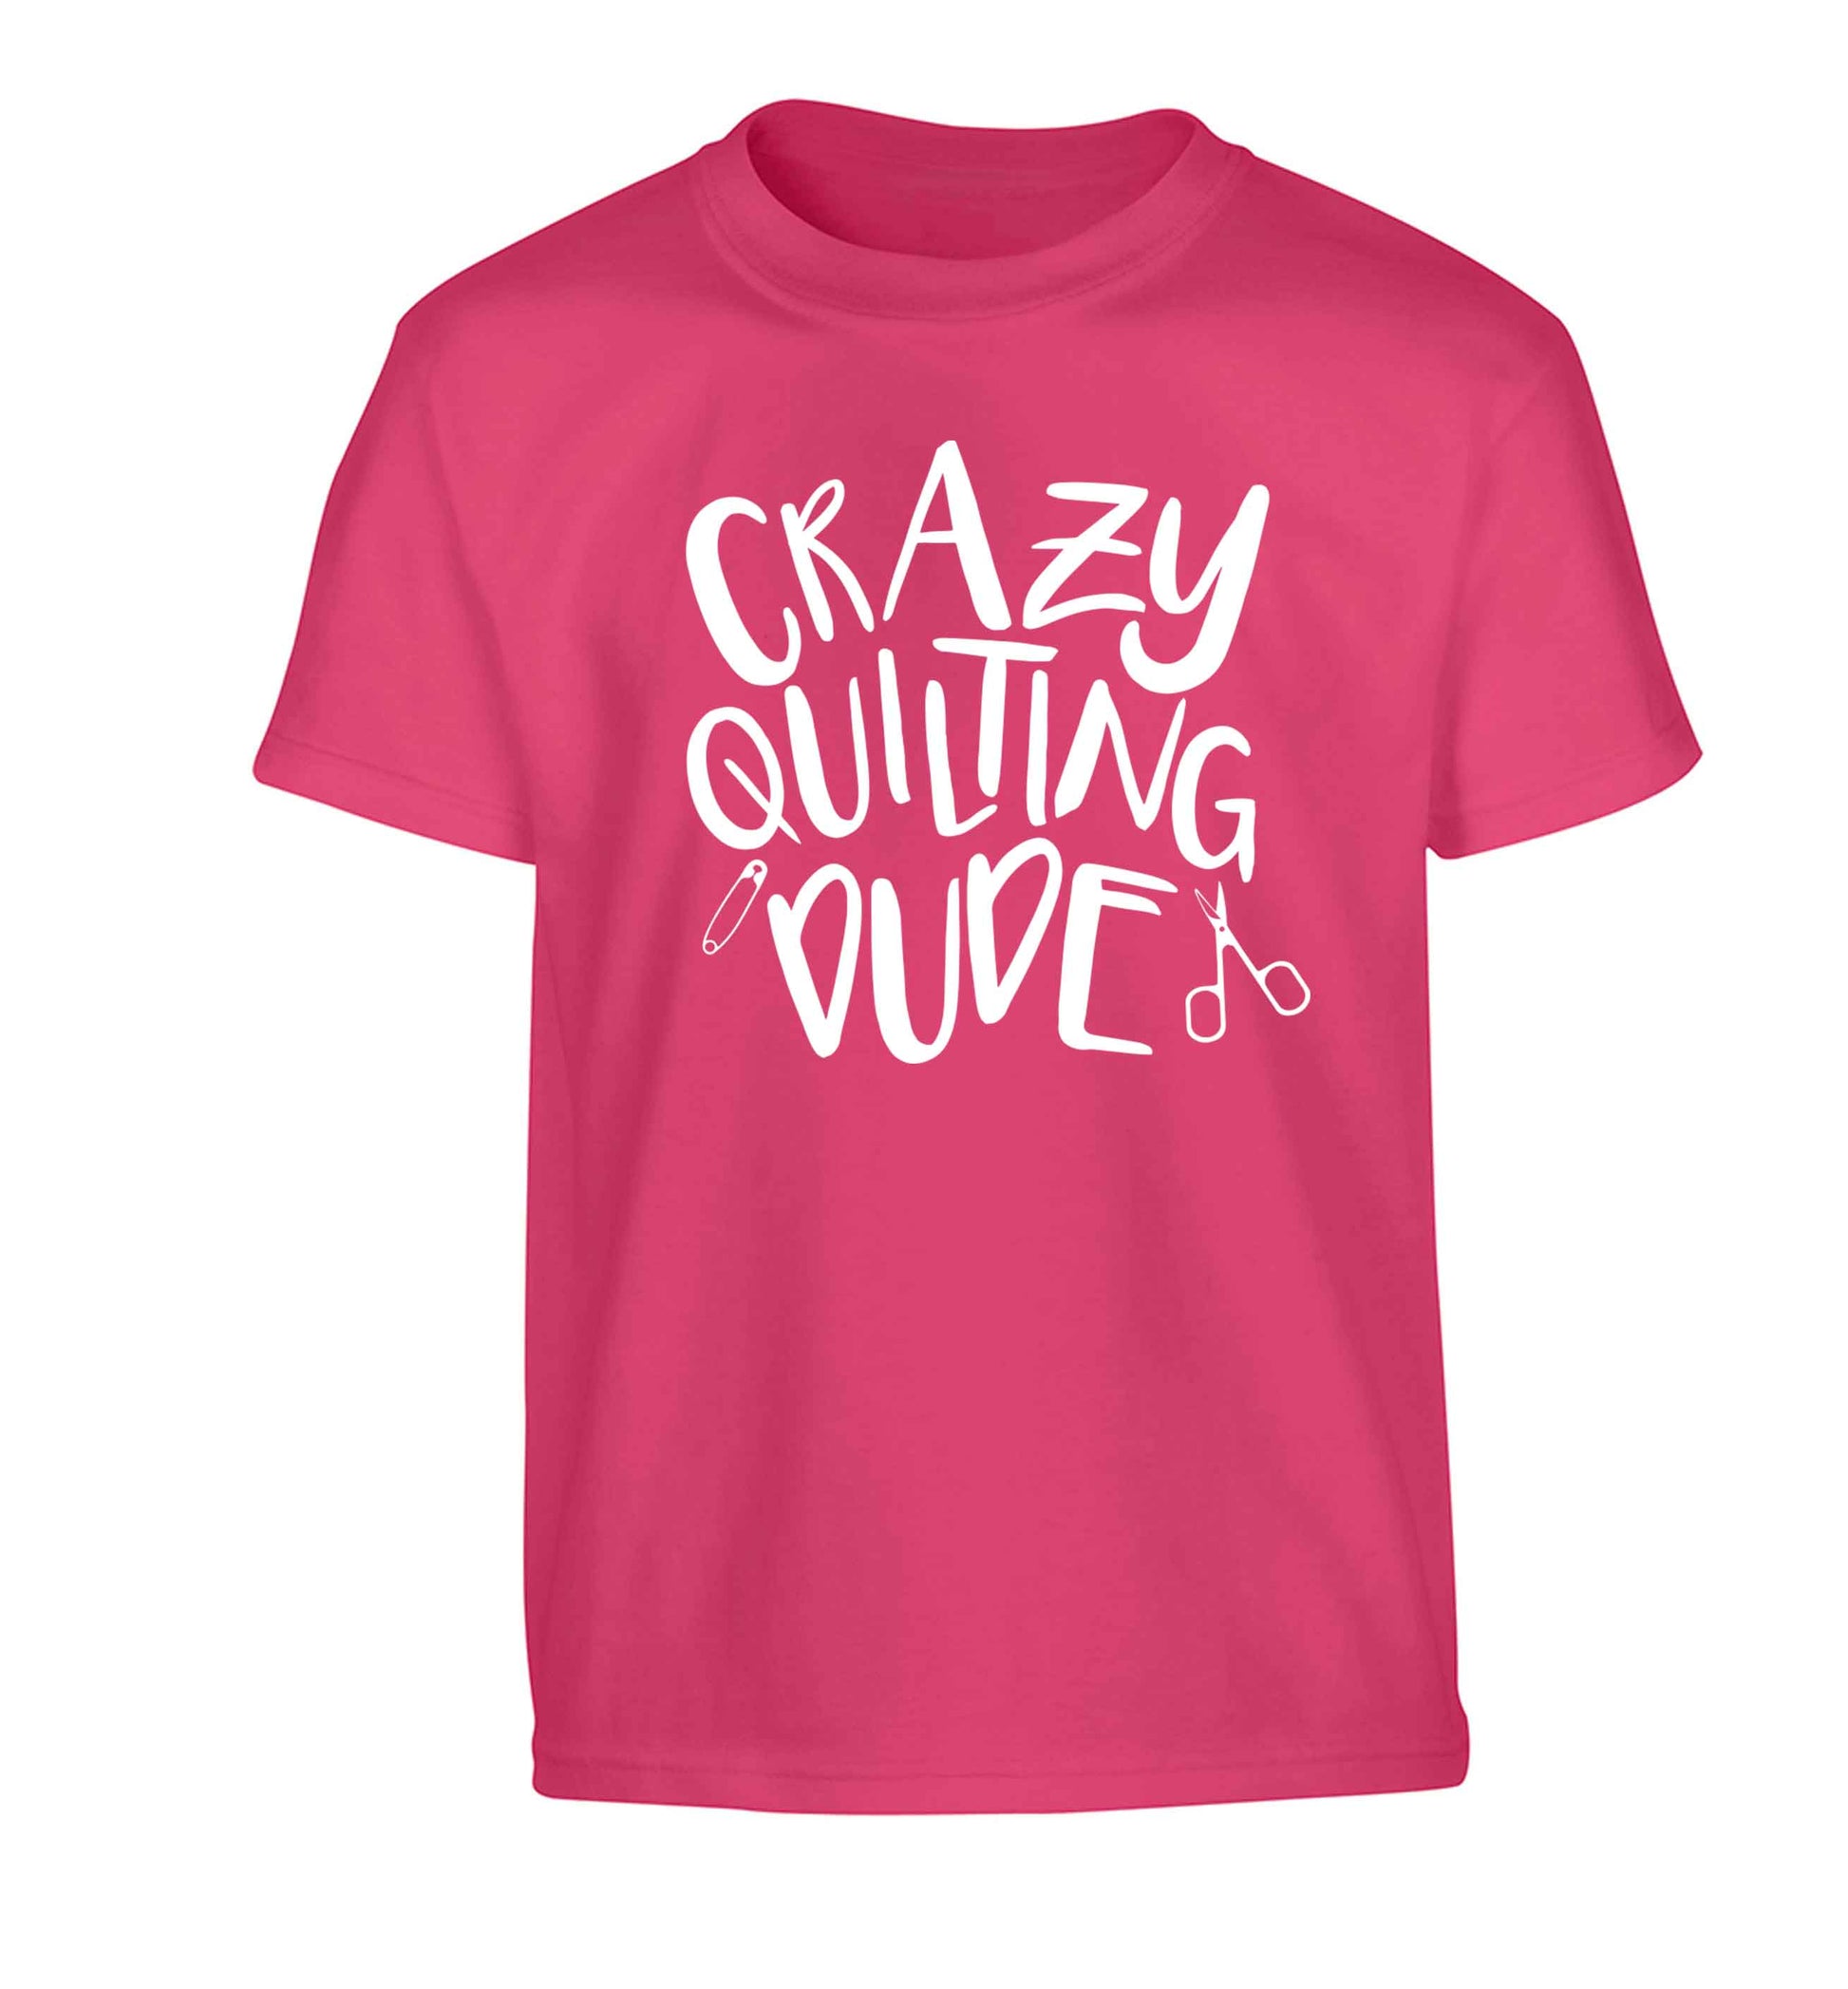 Crazy quilting dude Children's pink Tshirt 12-13 Years